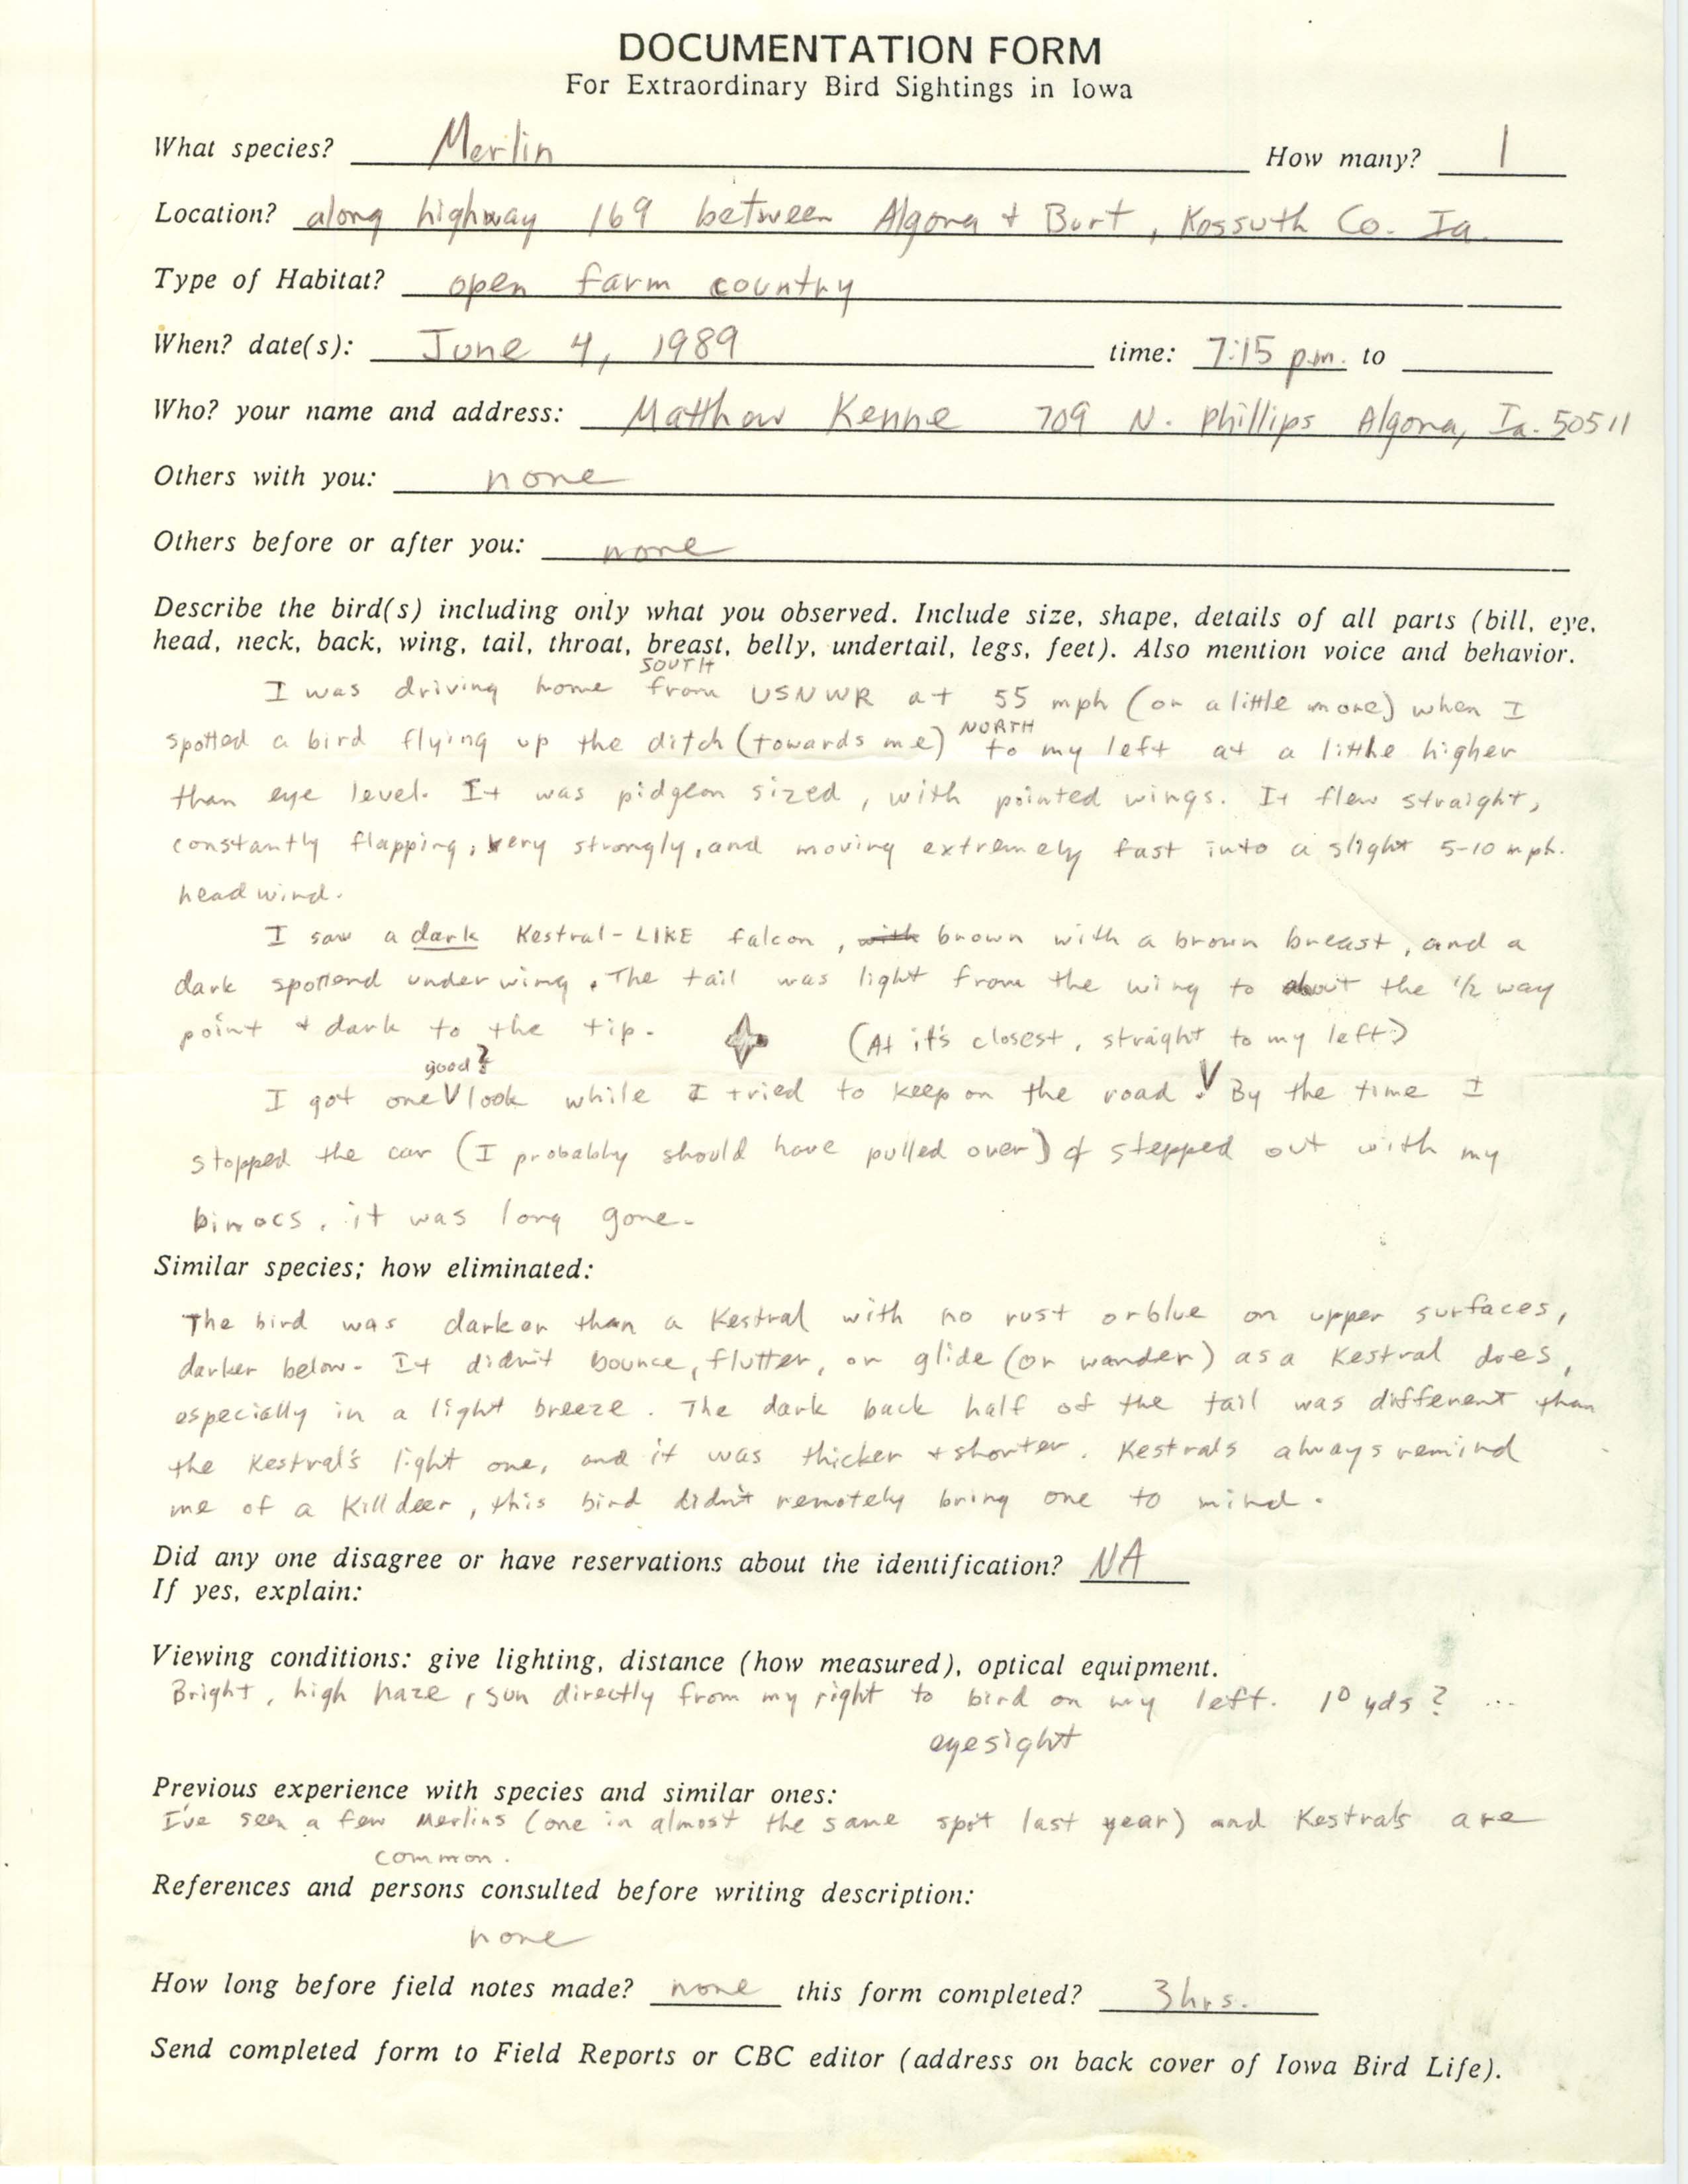 Rare bird documentation form for Merlin between Algona and Burt, 1989